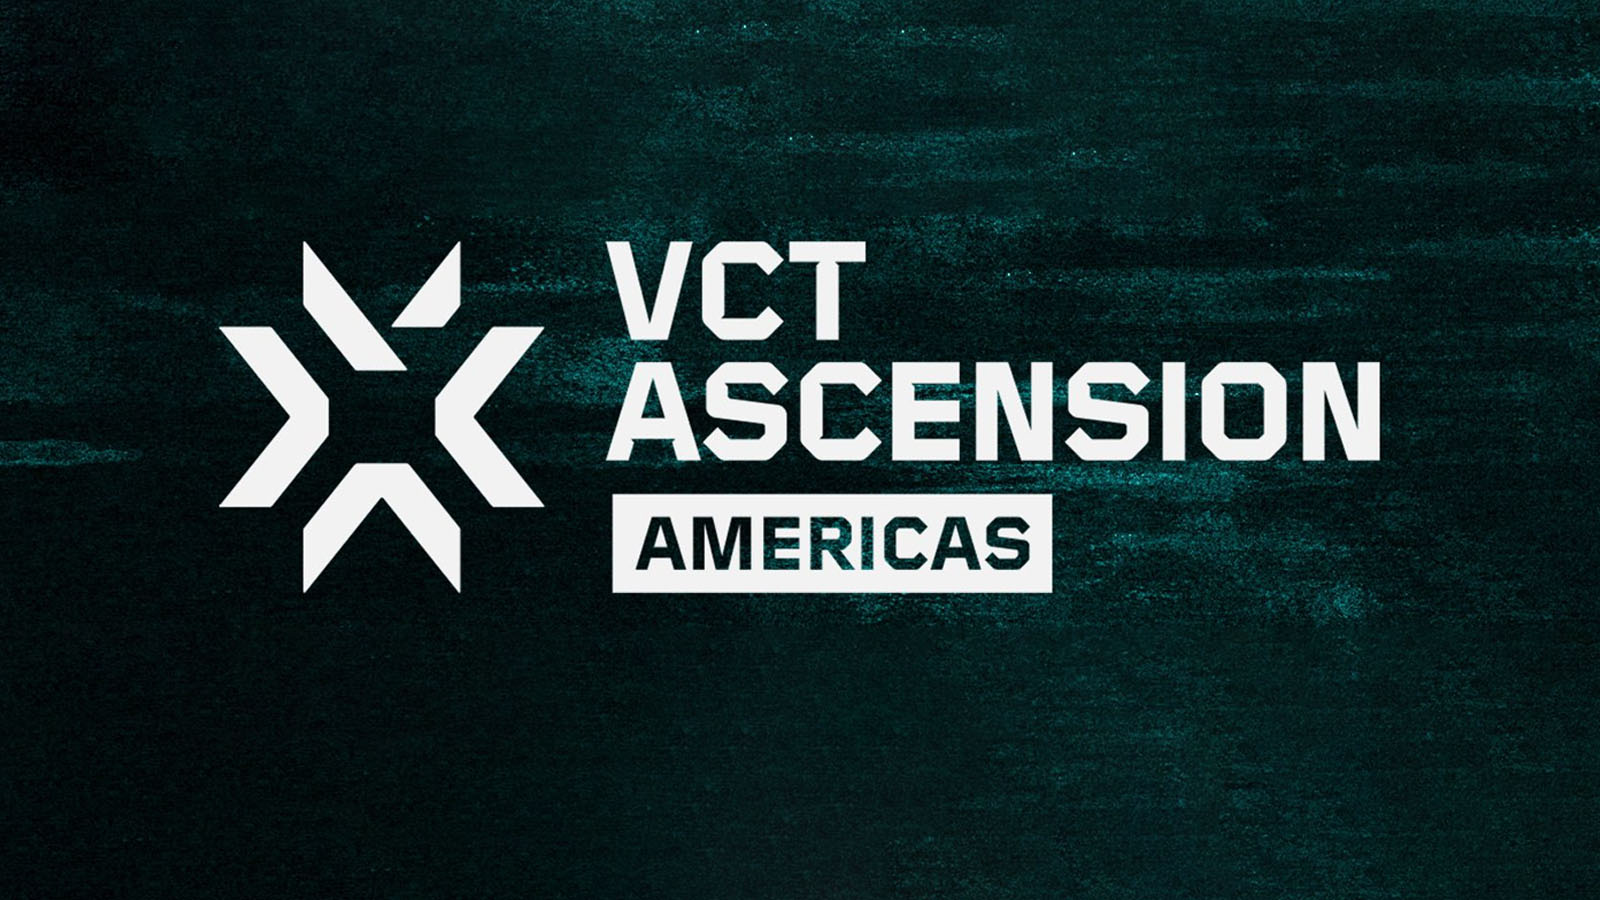 VCT Ascension Americas 2023 tournament to kick off in Brazil GameNewsUSA